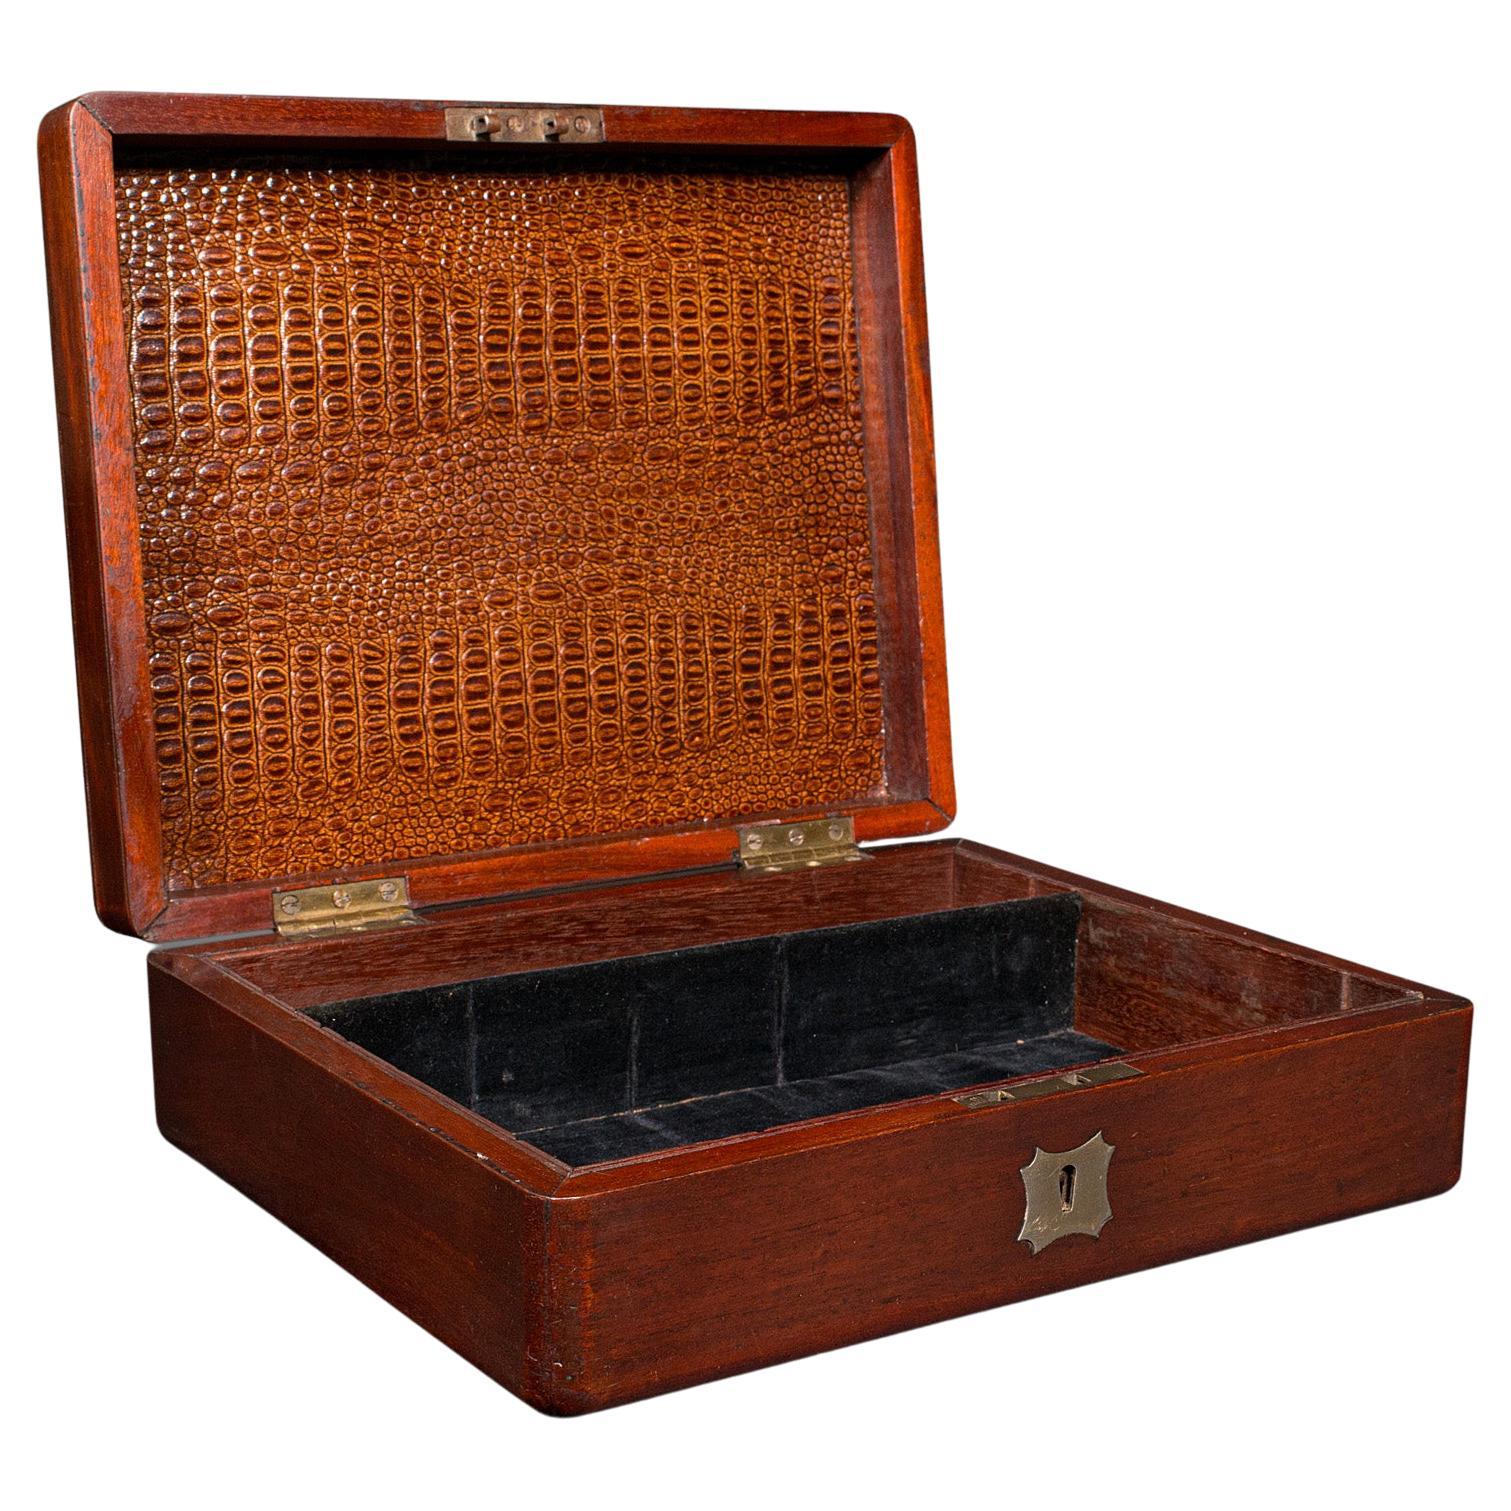 Small Antique Lined Jewellery Box, English, Keepsake Case, Victorian, Circa 1860